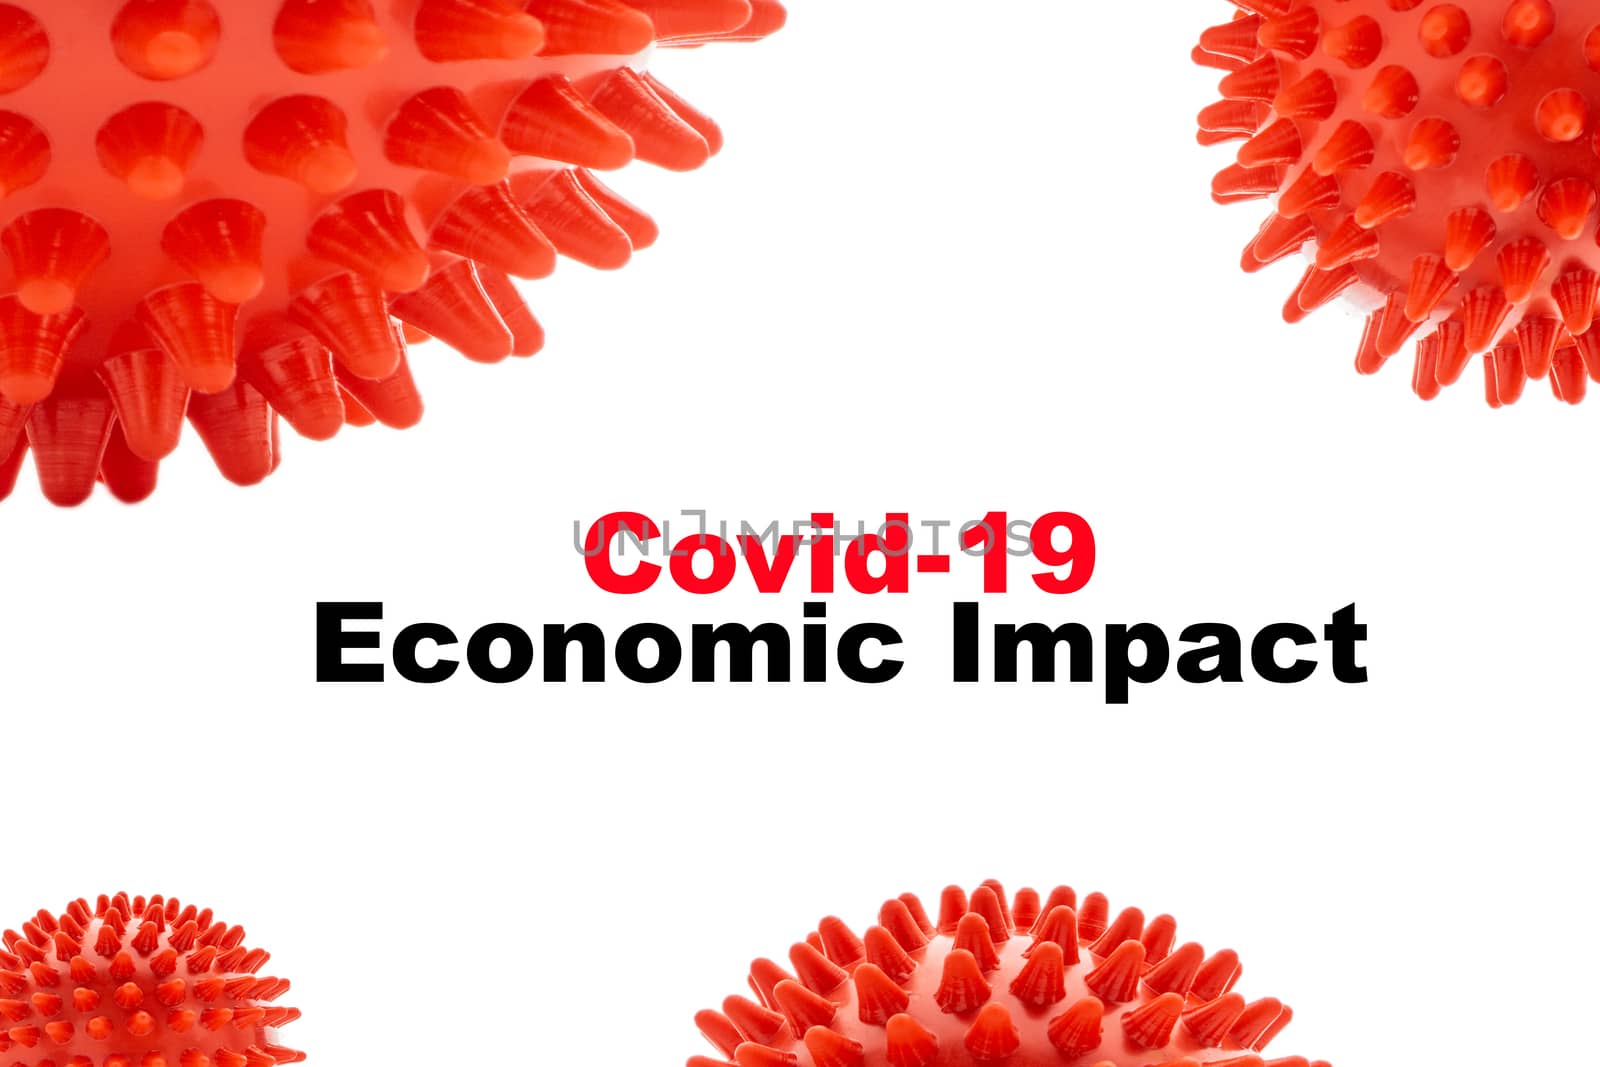 COVID-19 ECONOMIC IMPACT text on white background. Covid-19 or Coronavirus concept